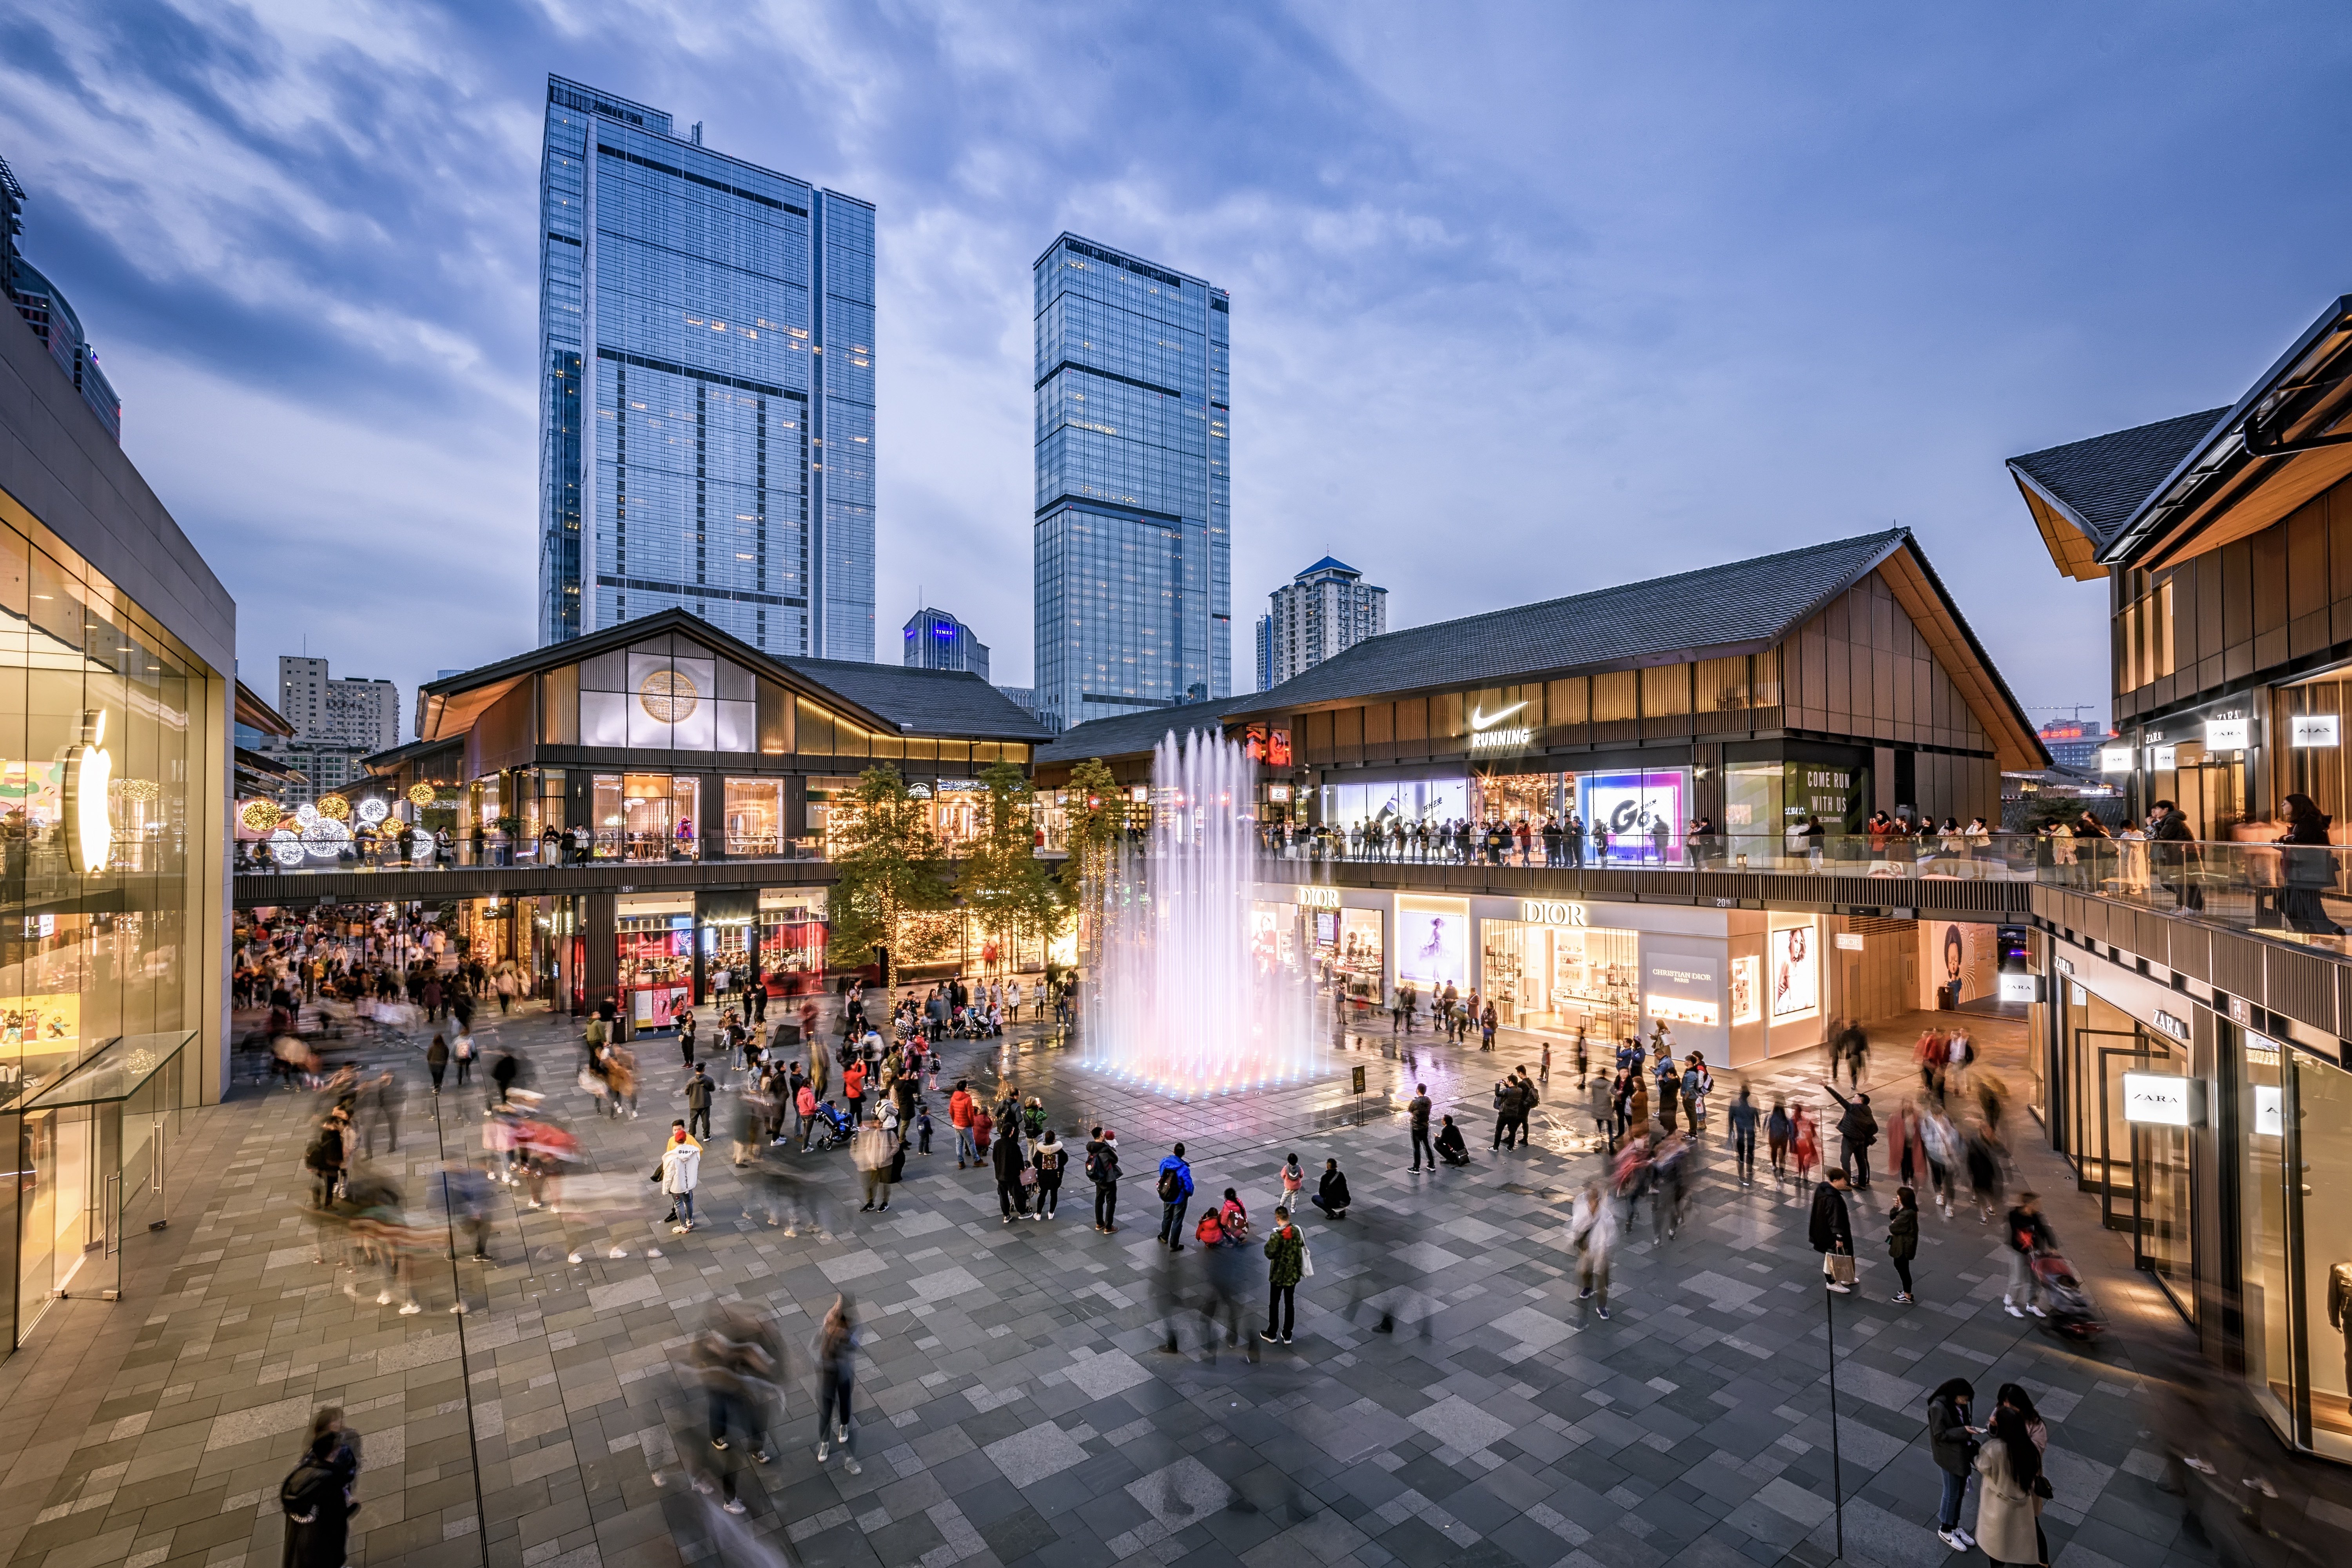 Chengdu, a rising megacity based on sound governance